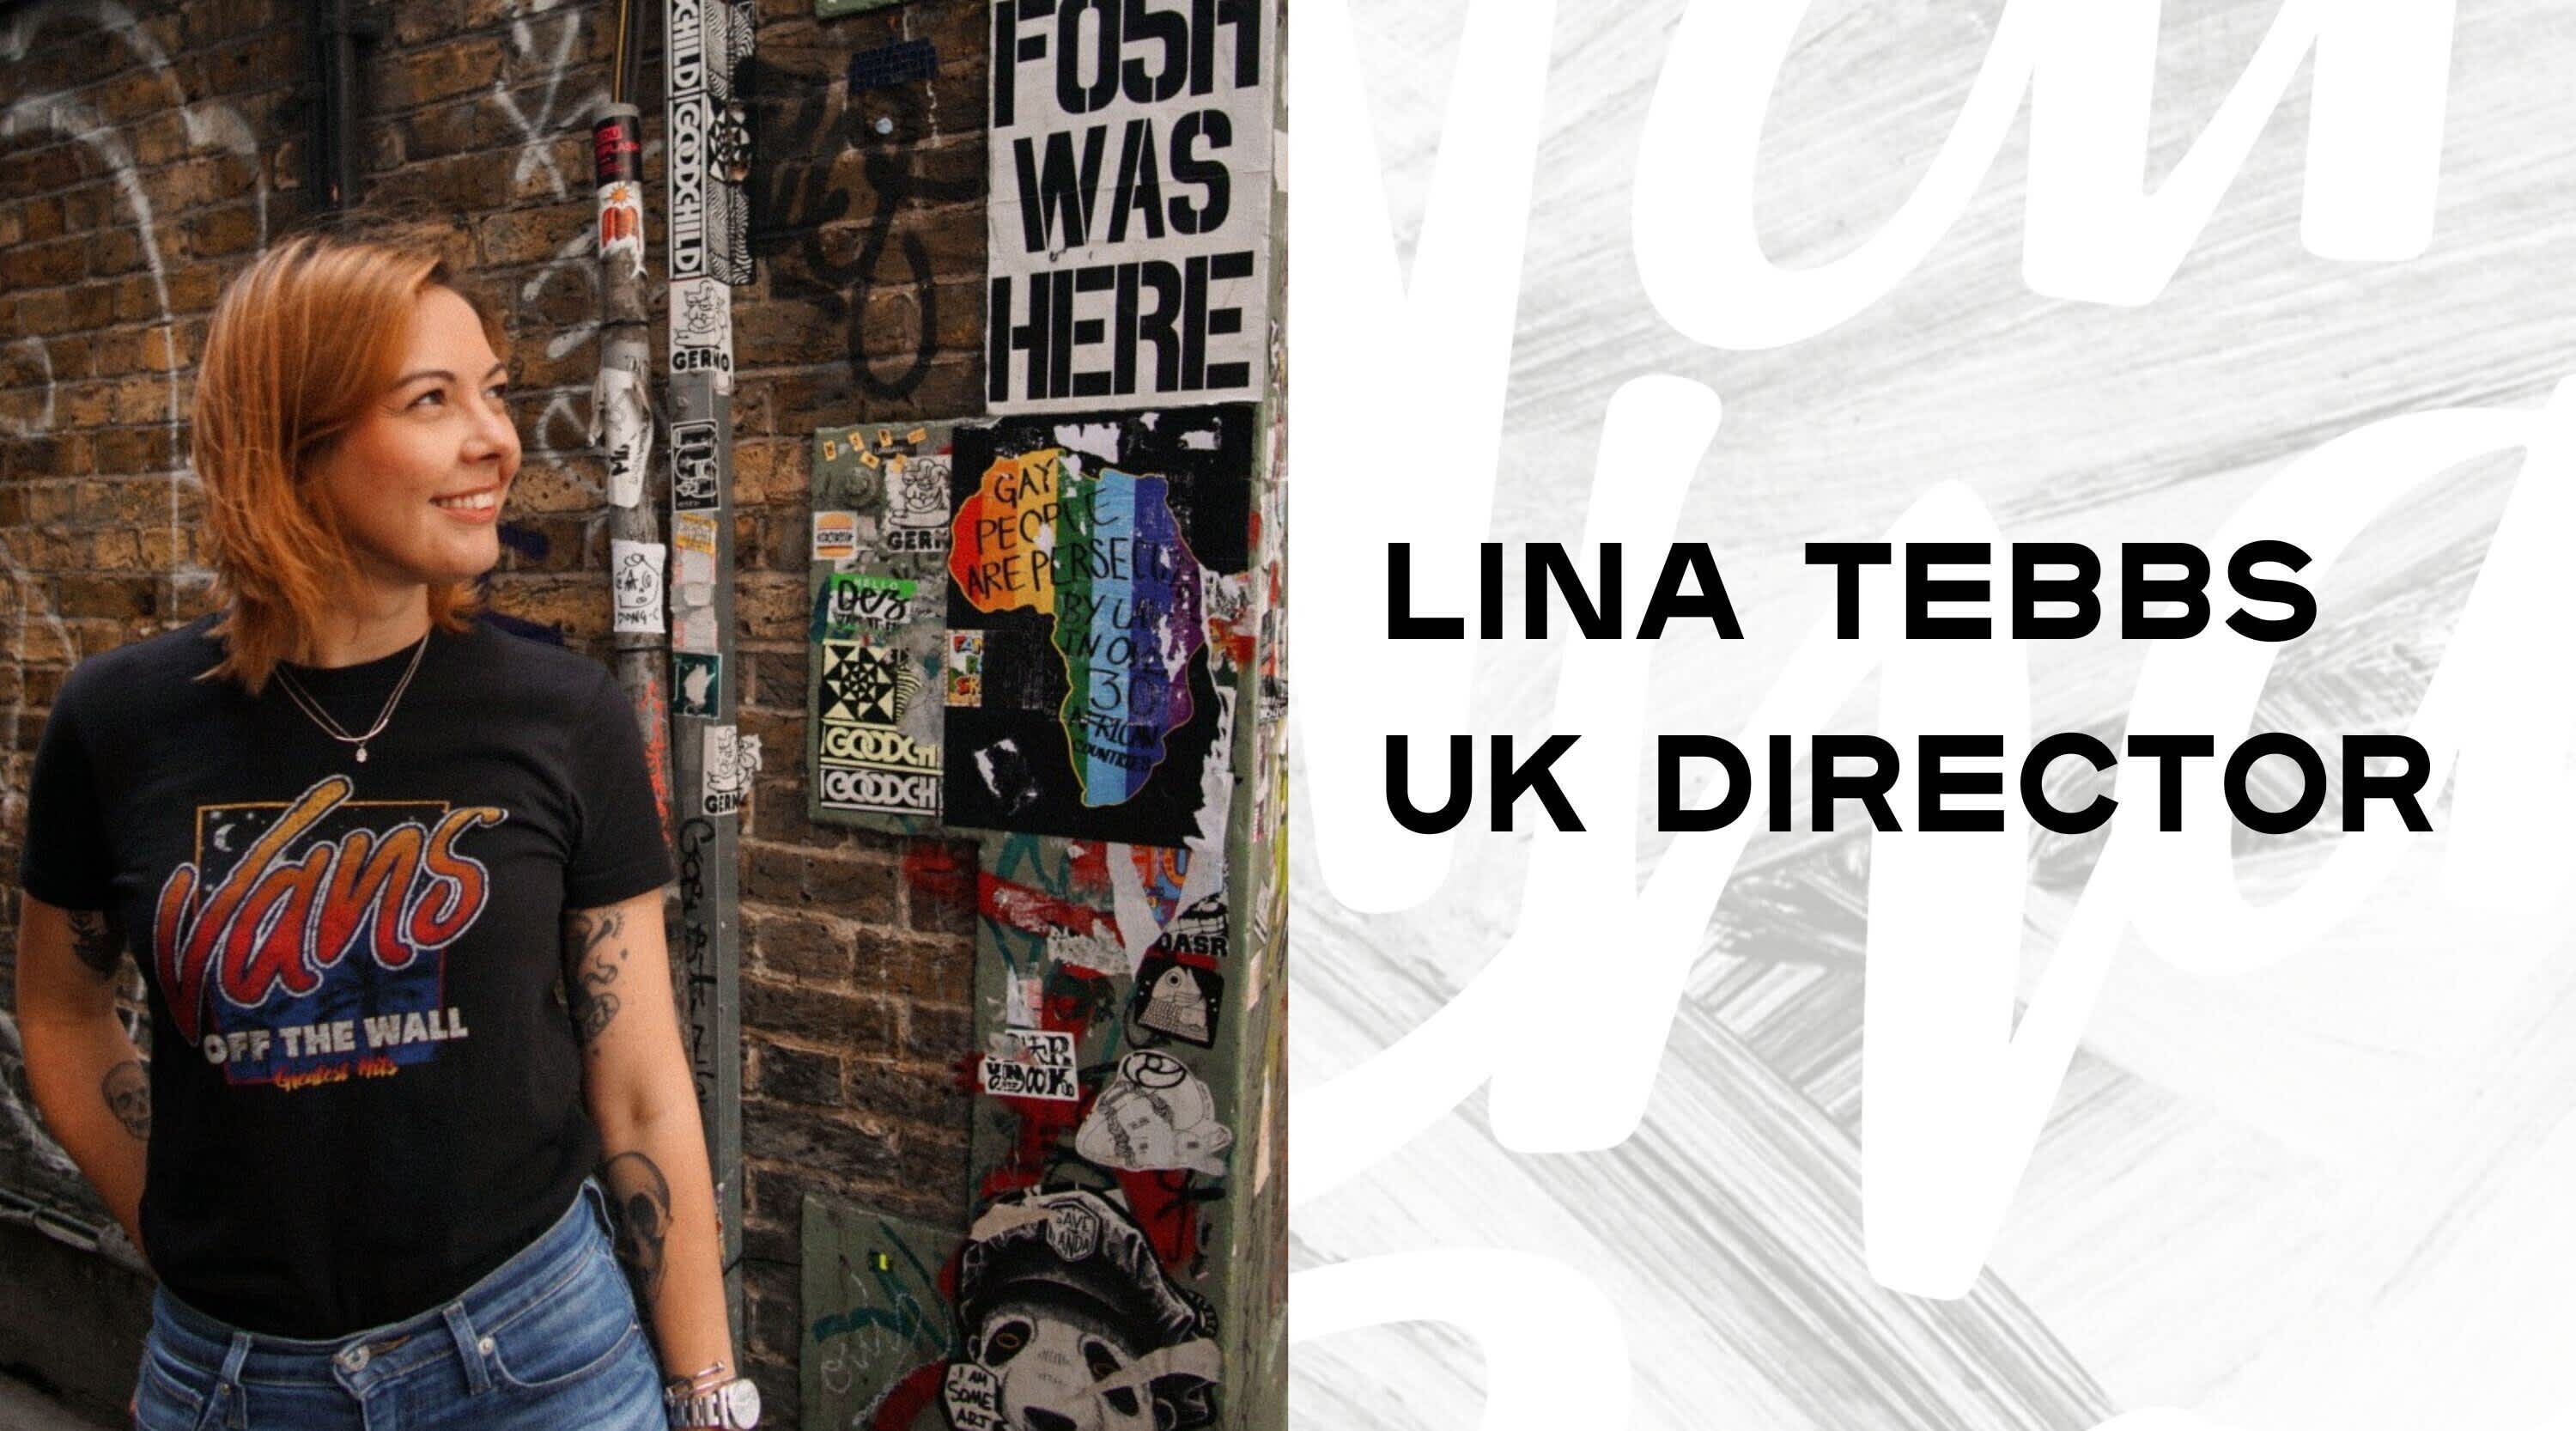 Lina Tebbs, UK Director